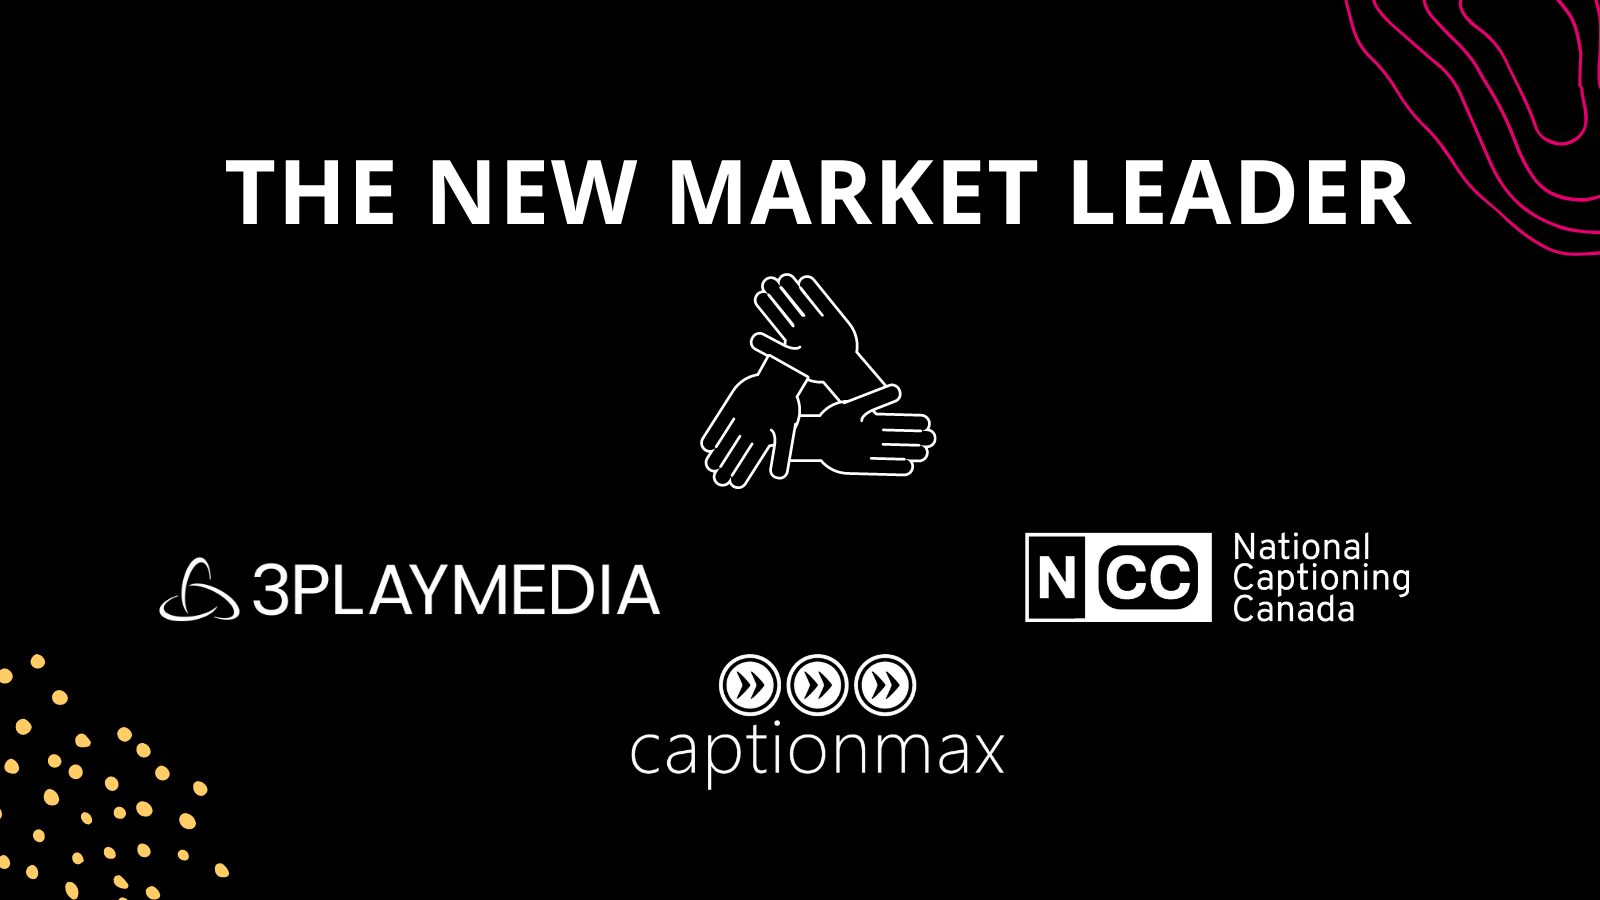 The New Marketing Leader: 3Play Media, Captionmax, National Captioning Canada